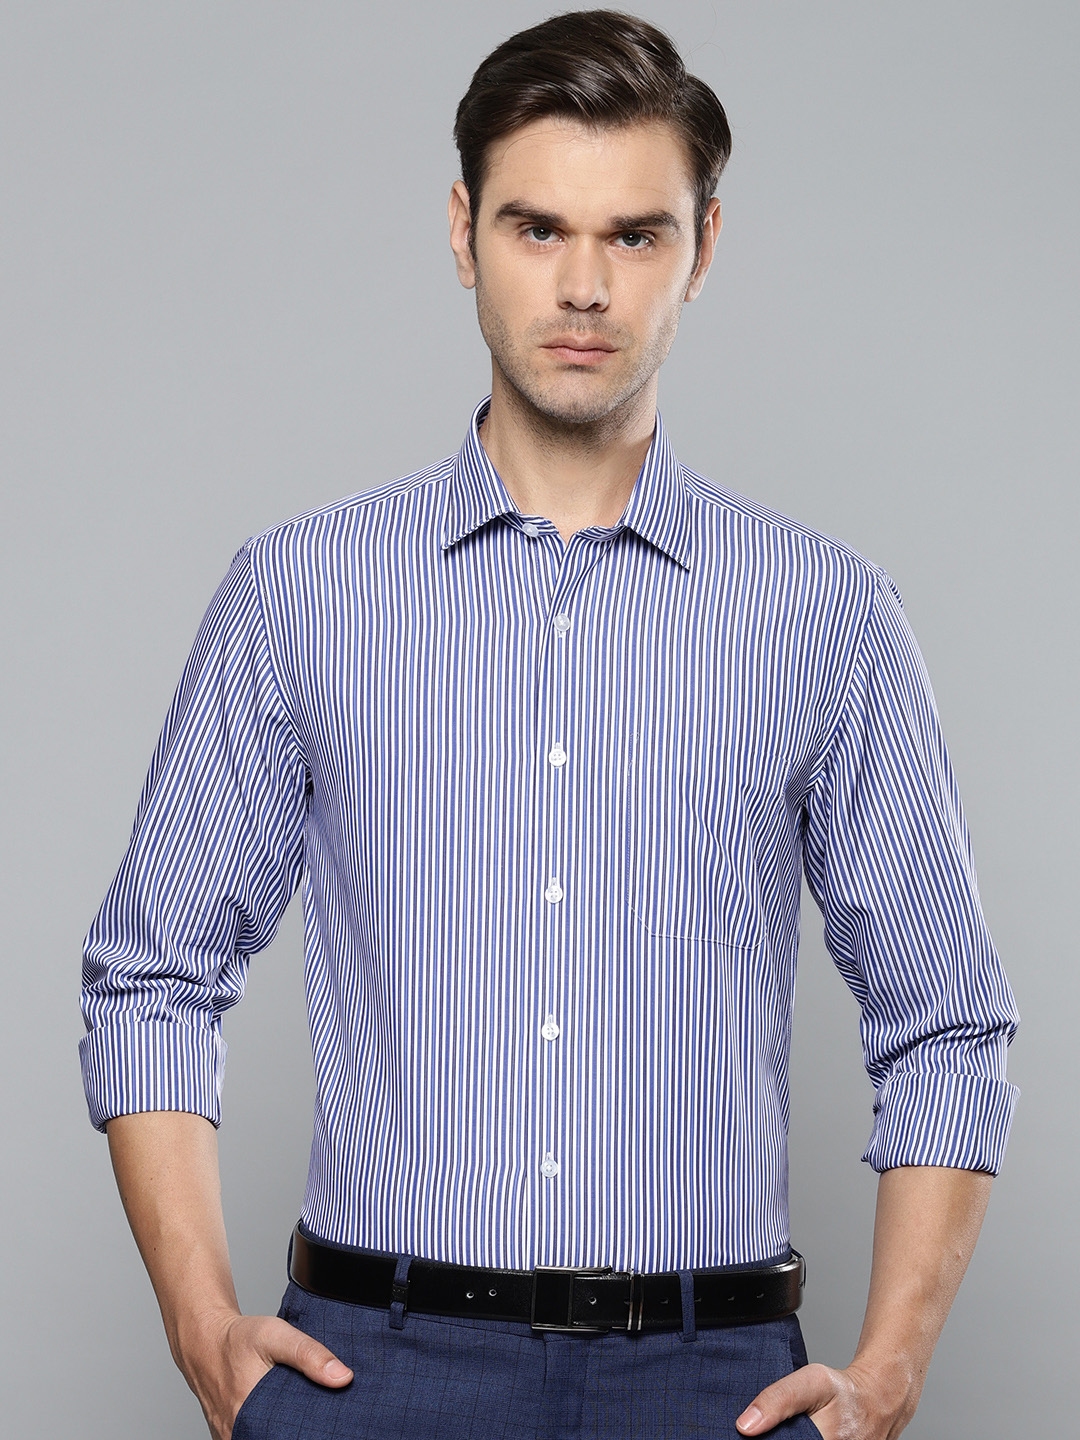 Buy Louis Philippe Men White & Purple Wrinkle Free Striped Formal Shirt on  Myntra